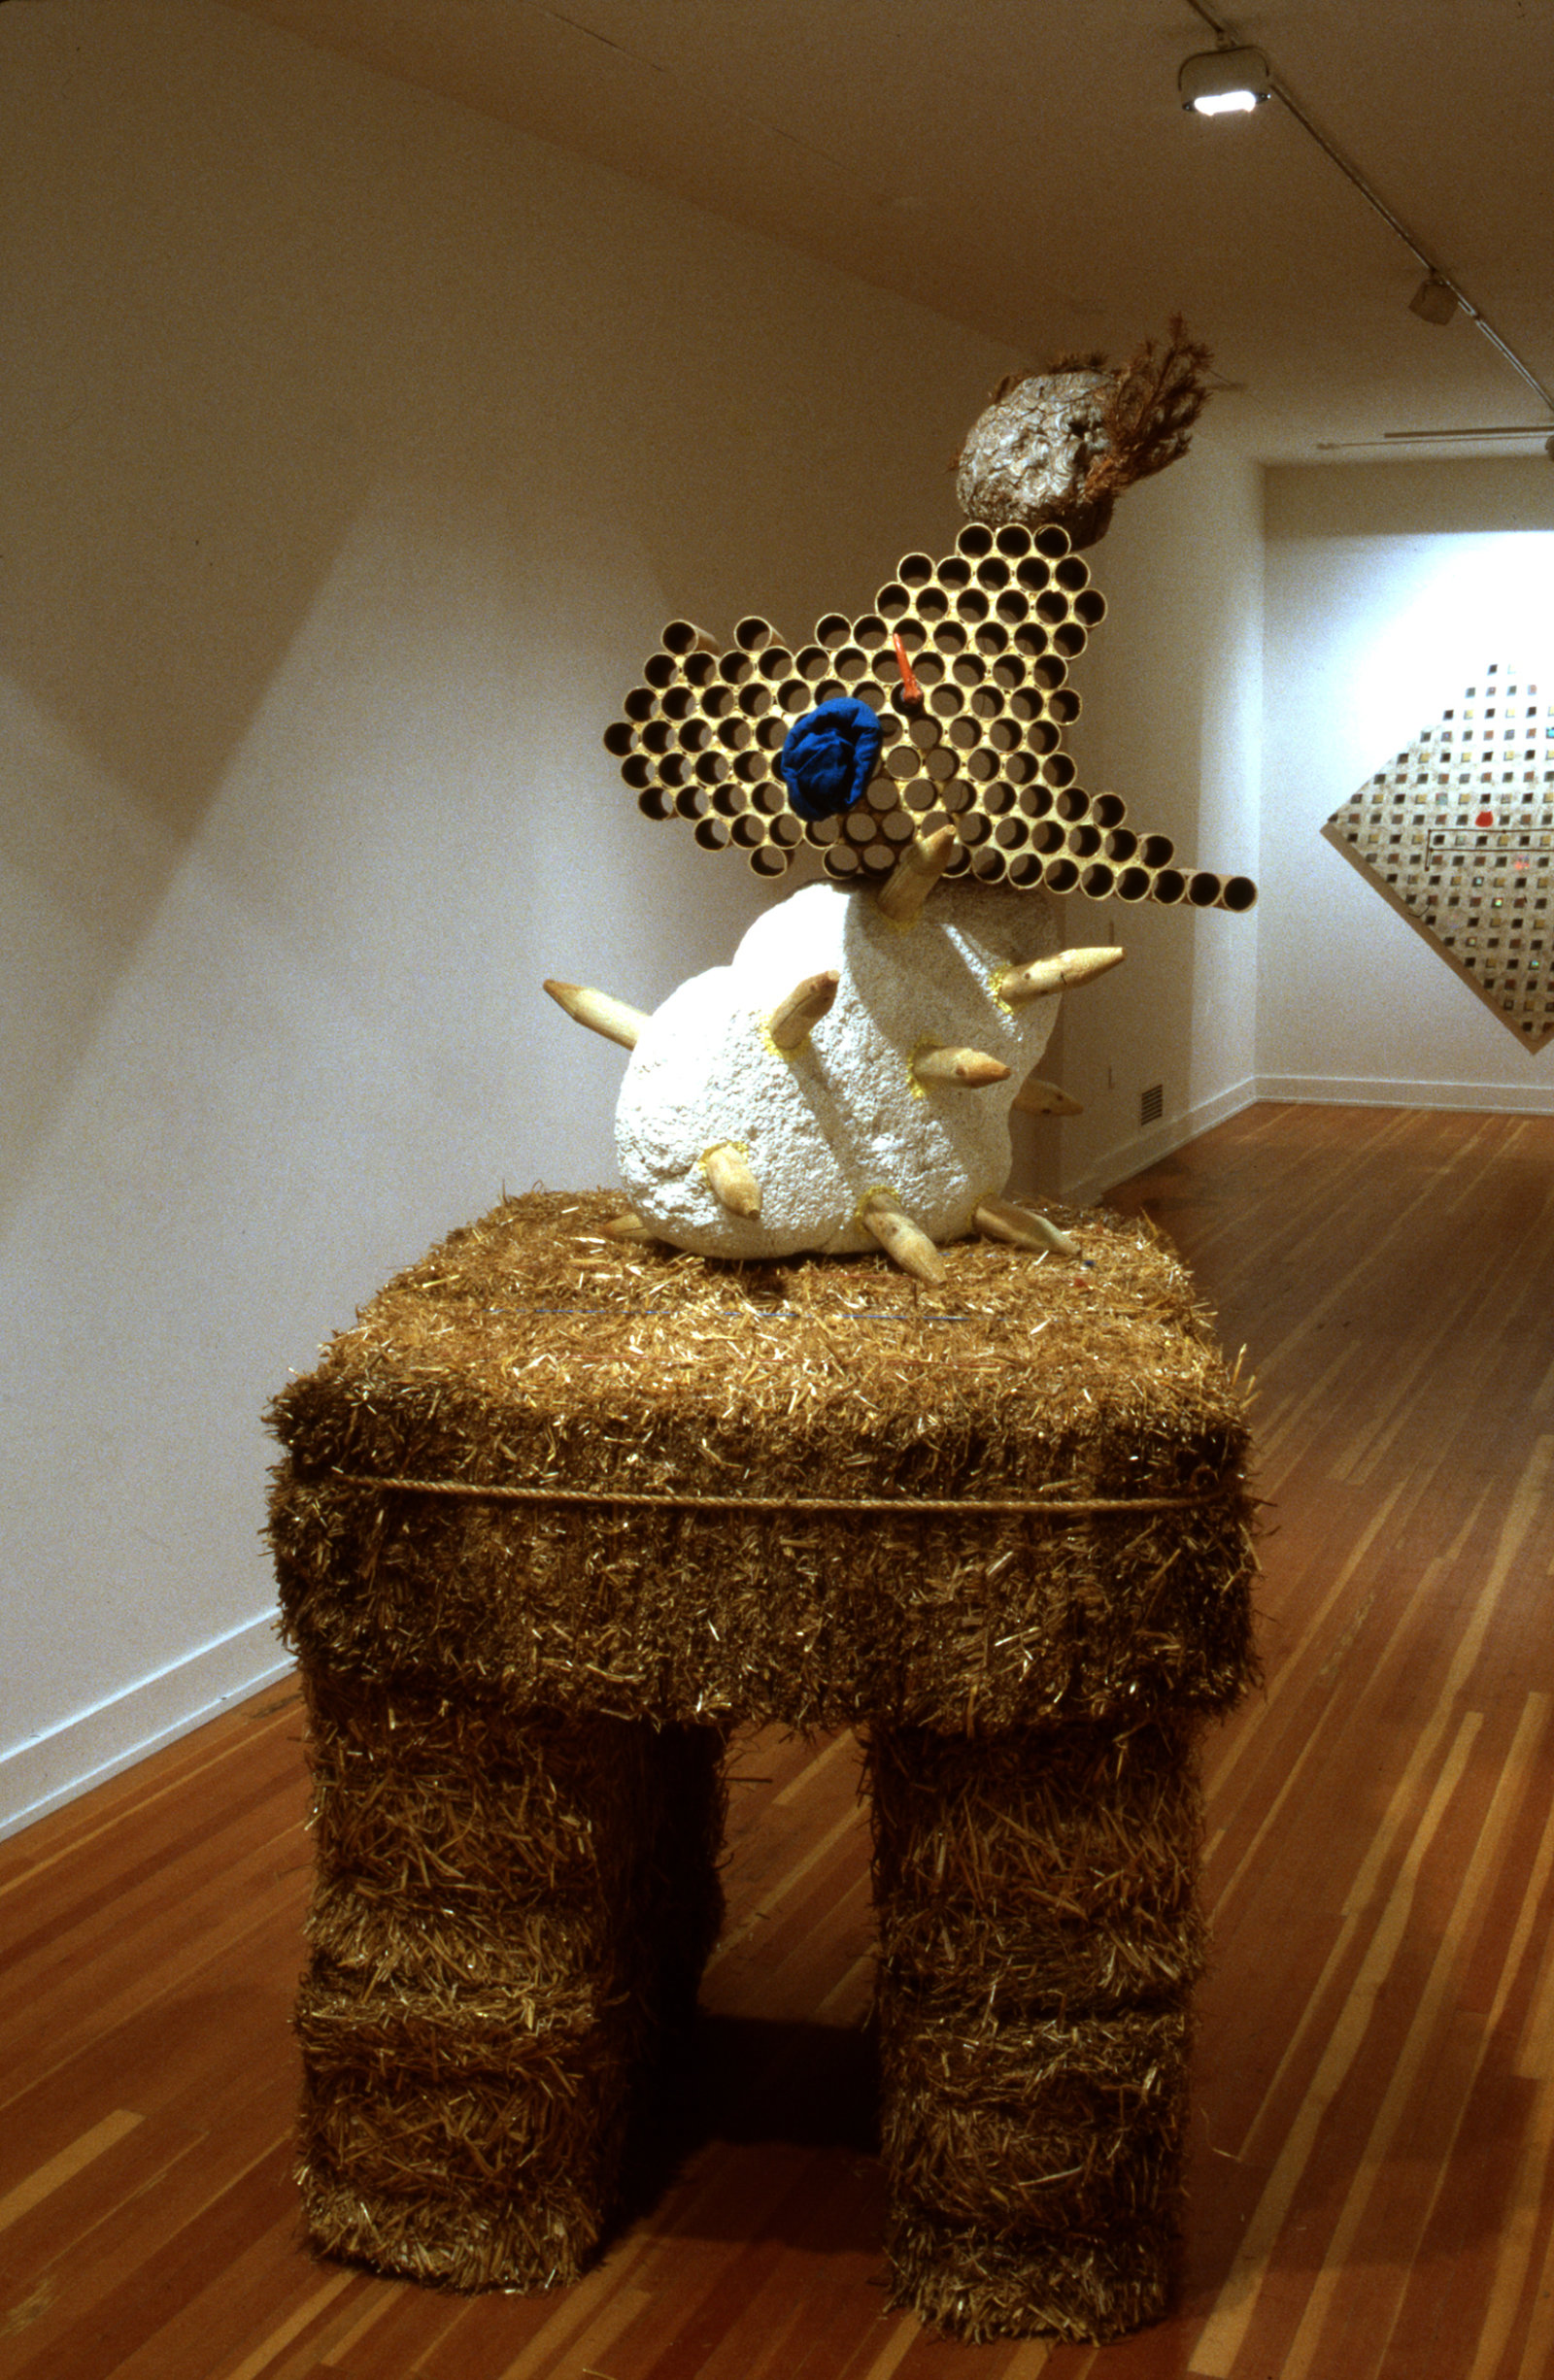 Jerry Pethick, Gobi Clone, 1996/1997, straw bales, styrofoam, wood, cardboard, hornet's nest, anodized aluminum, polypropylene rope, cloth, orange rubber, iron wire, sulphur, dried fir needles, 107 x 55 x 46 in. (272 x 140 x 117 cm)